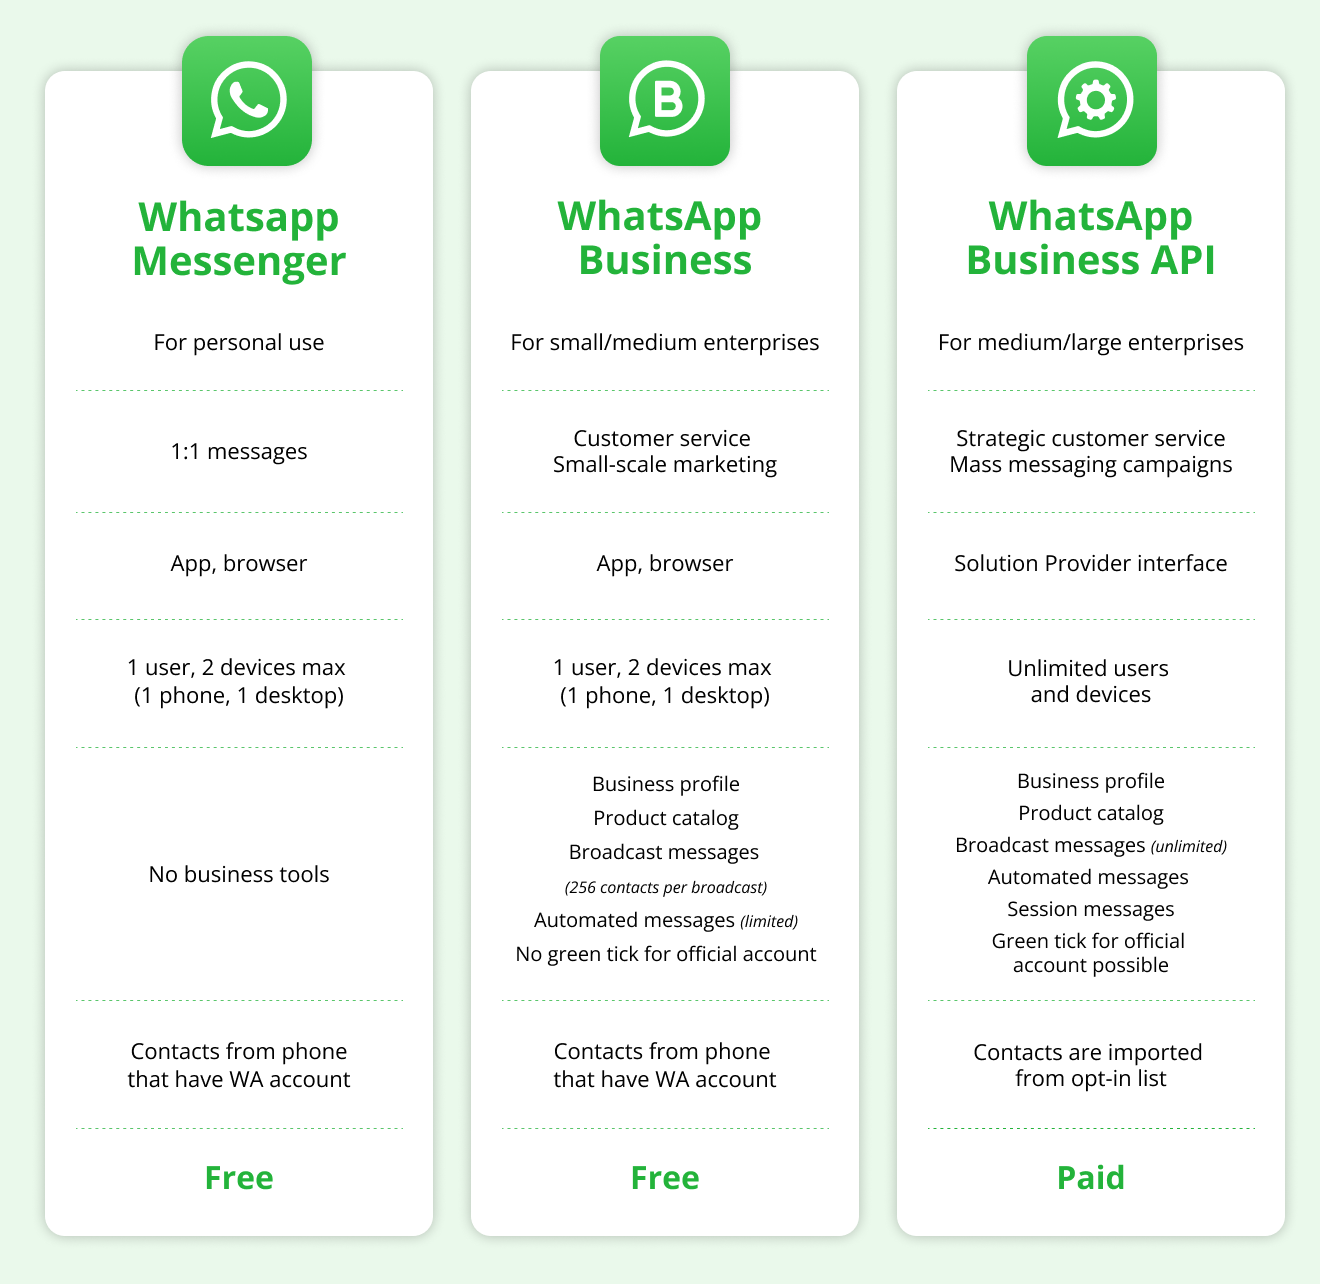 The key differences between WhatsApp, WhatsApp Business, and WhatsApp API